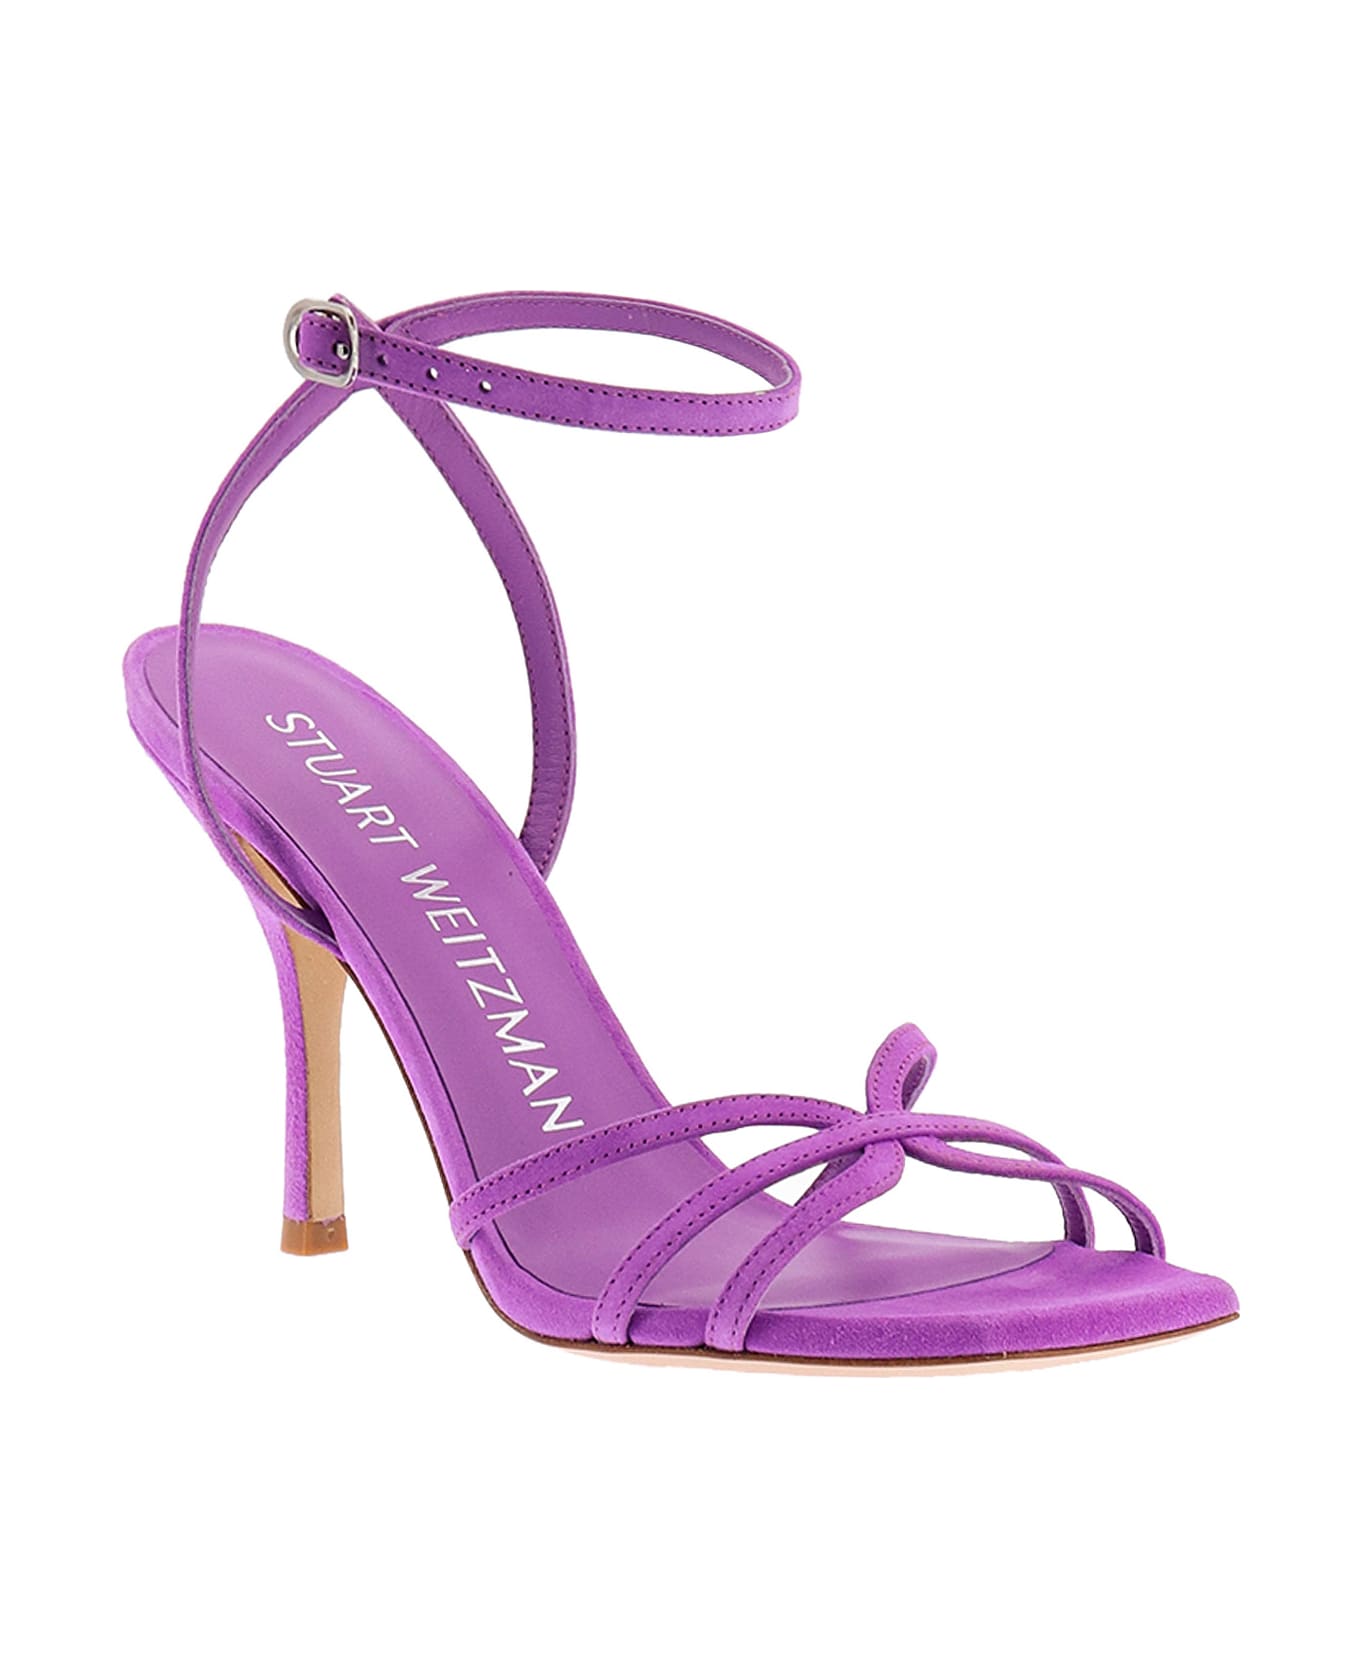 Stuart Weitzman Barelythere 100 Sandals - Purple サンダル